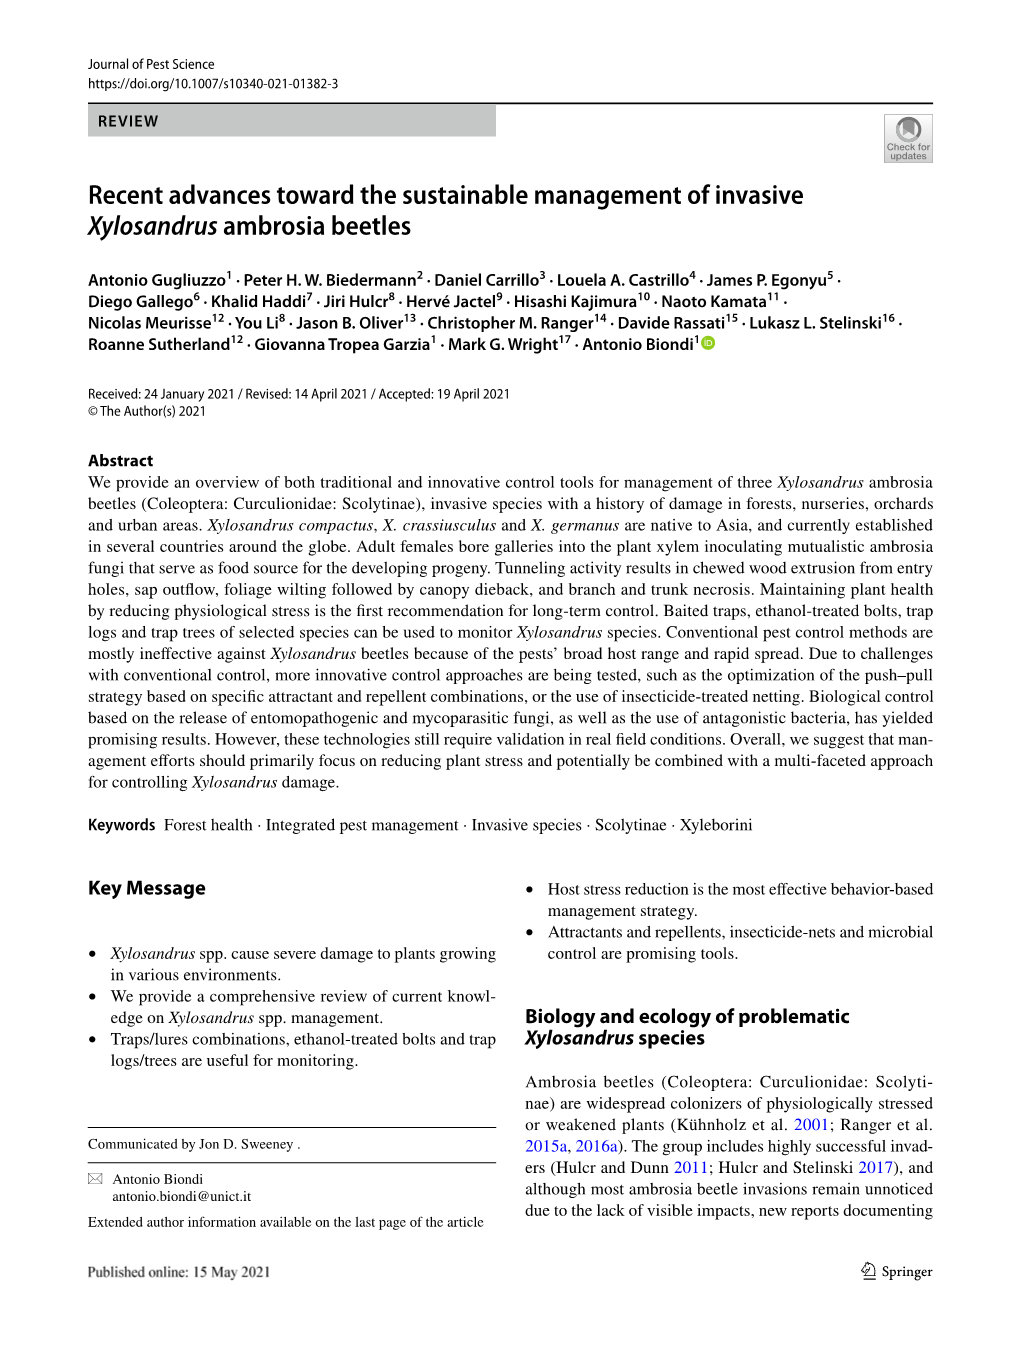 Recent Advances Toward the Sustainable Management of Invasive Xylosandrus Ambrosia Beetles